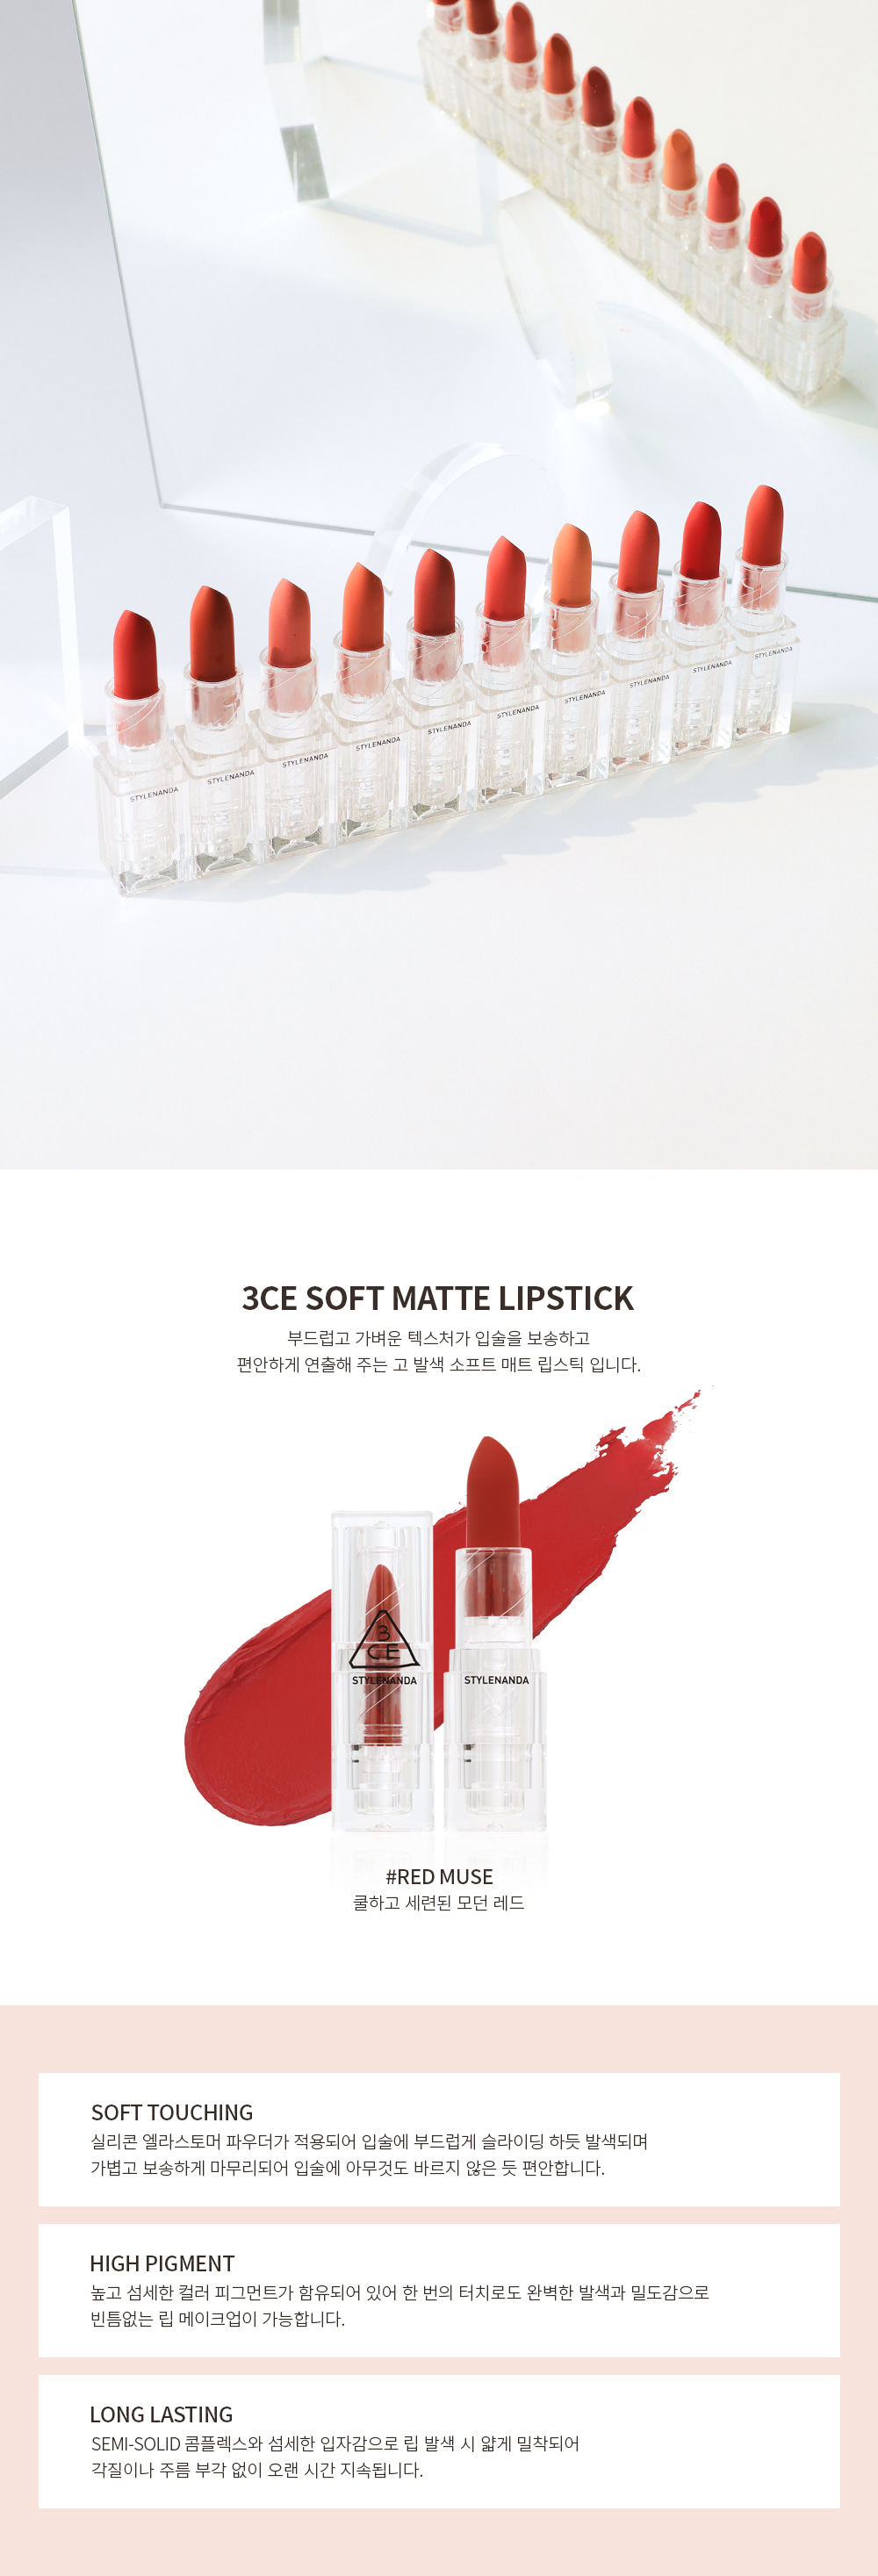 Soft Matte Lipstick I Skin Care Products I Korean Cosmetics – Cosmendy  America